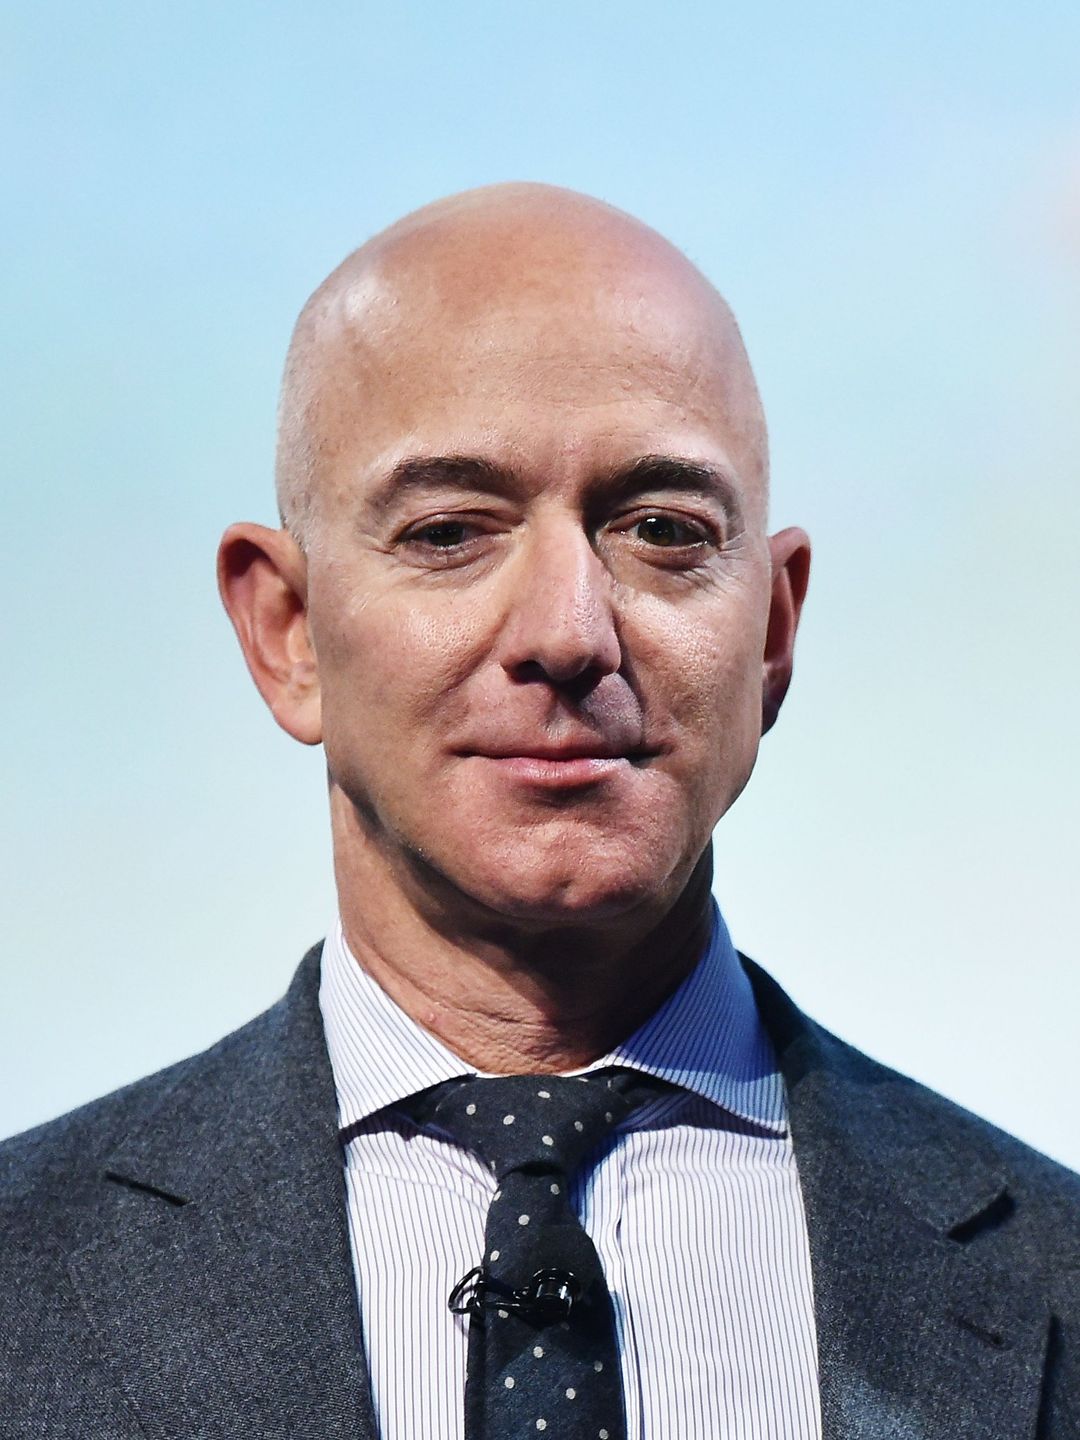 Jeff Bezos appearance